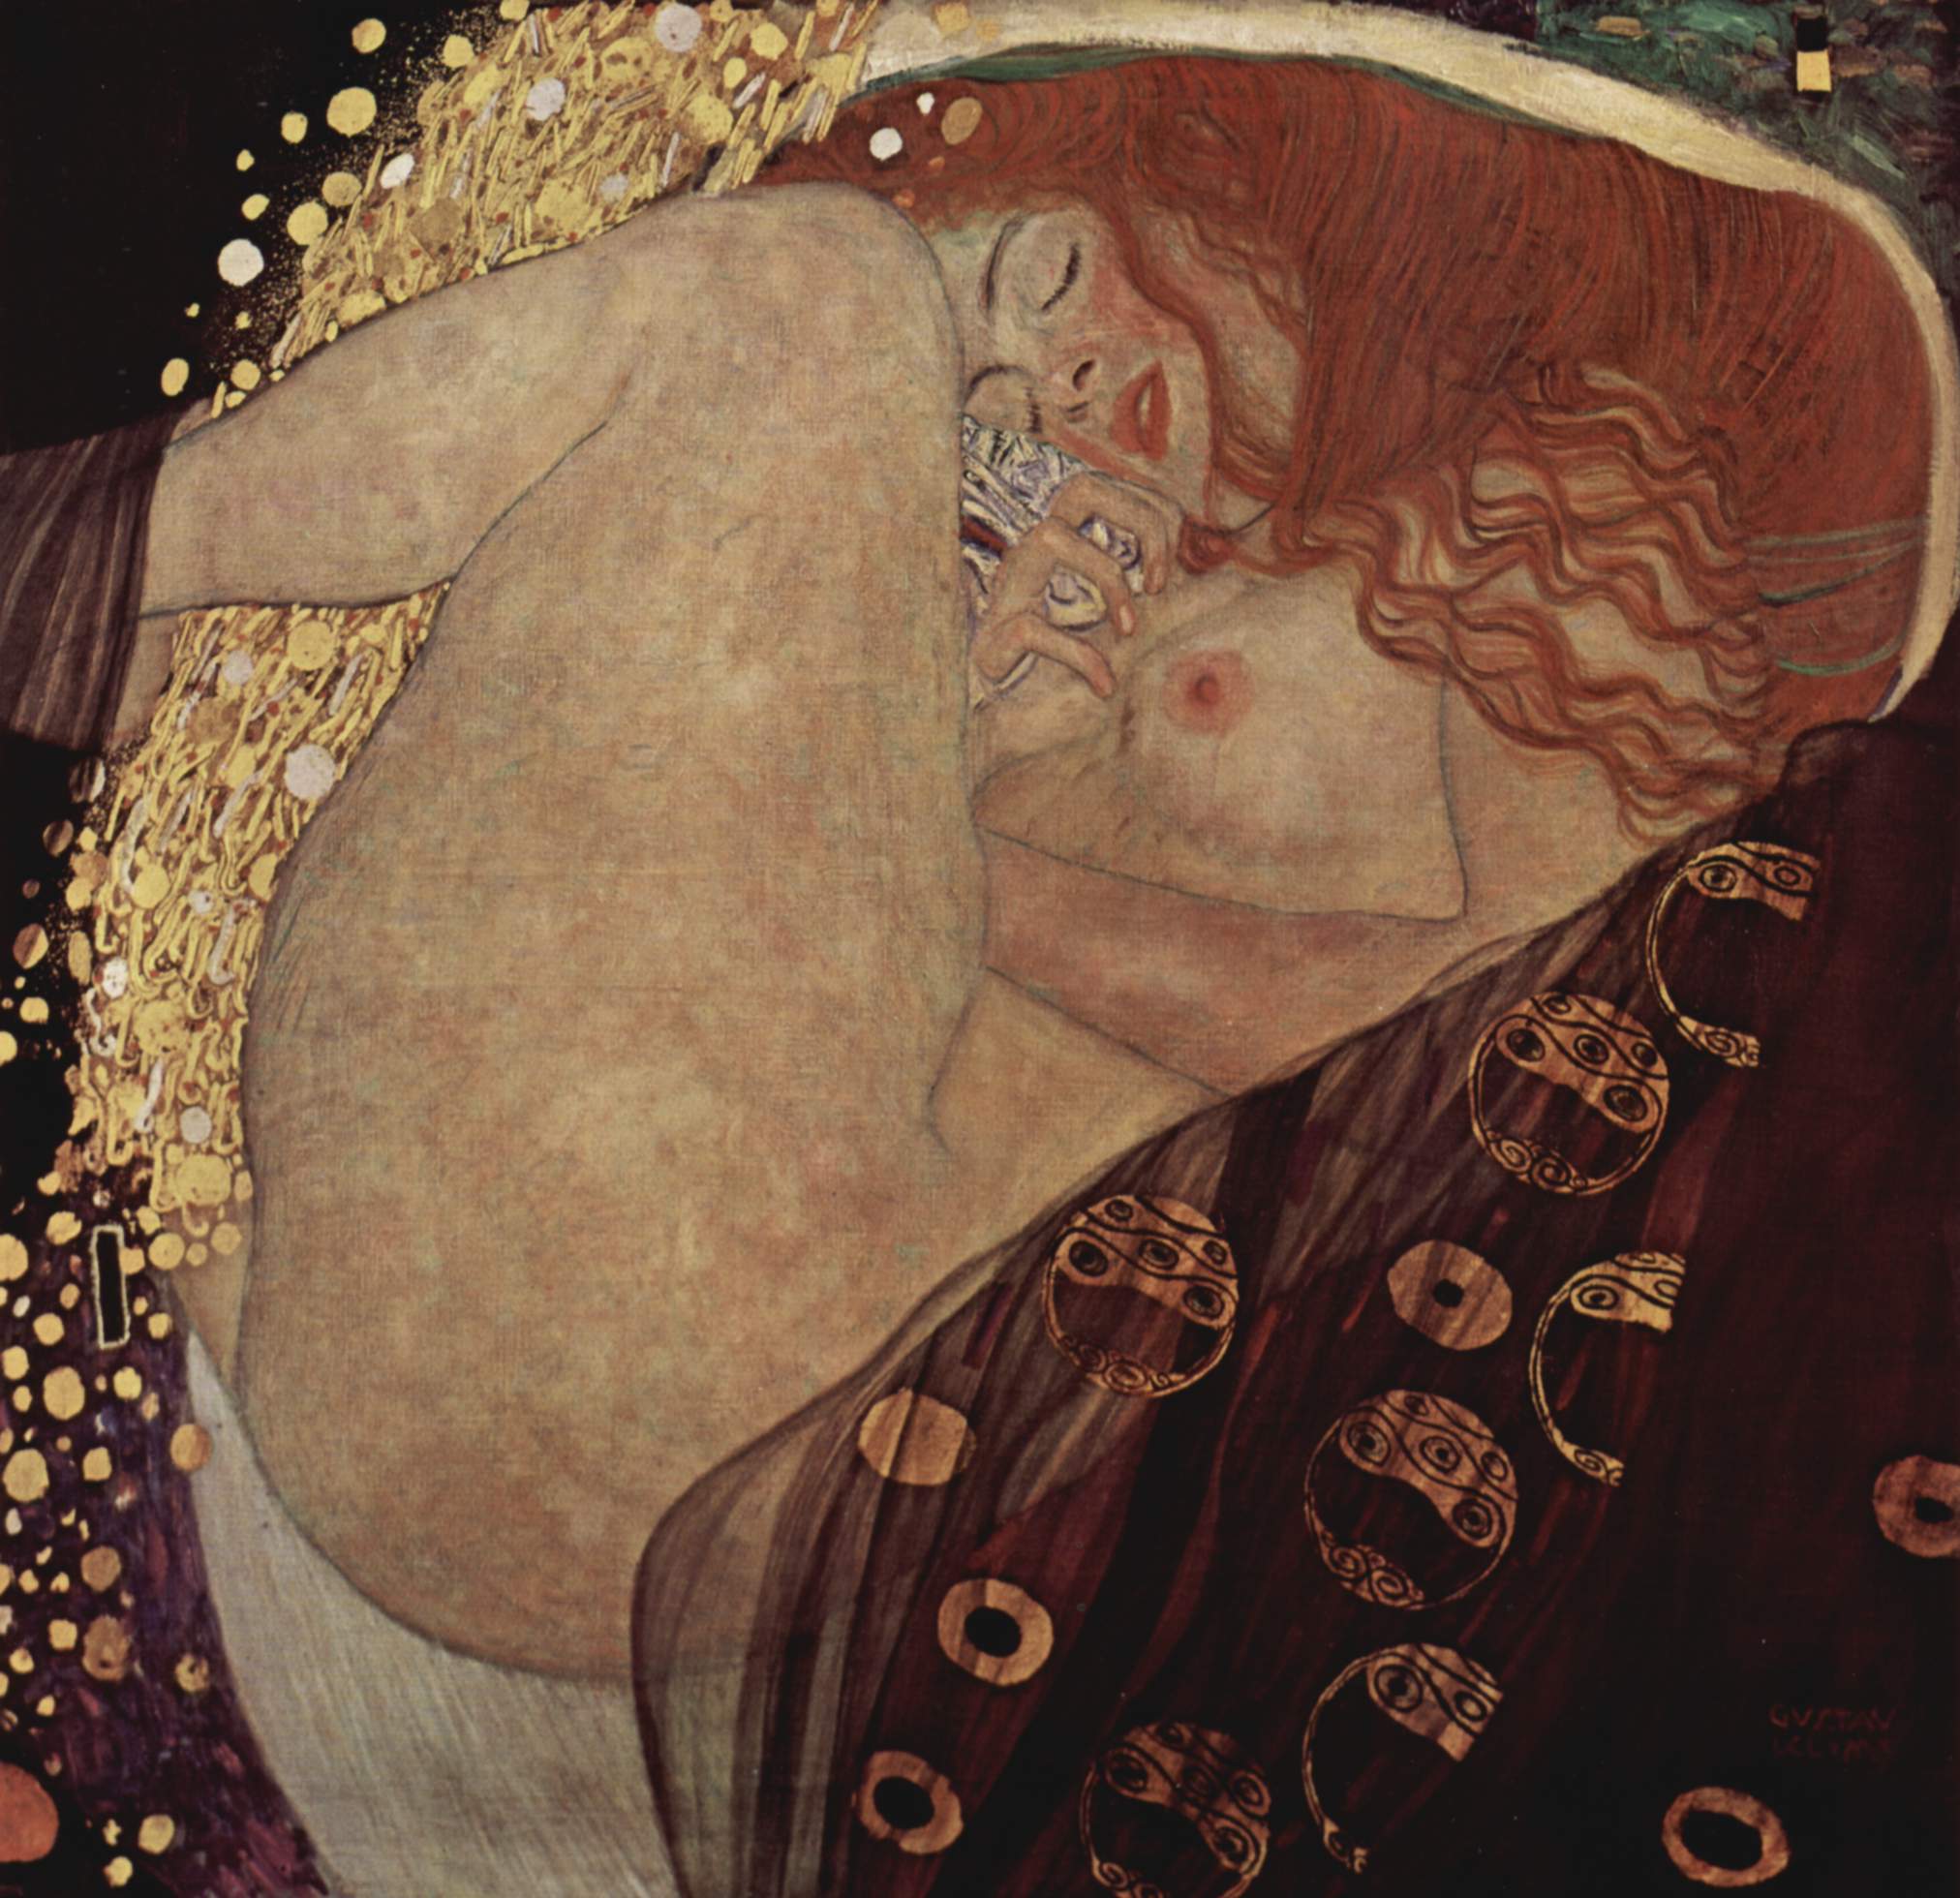 Danae by Gustav Klimt - 1908 - 77 cm x 83 cm private collection